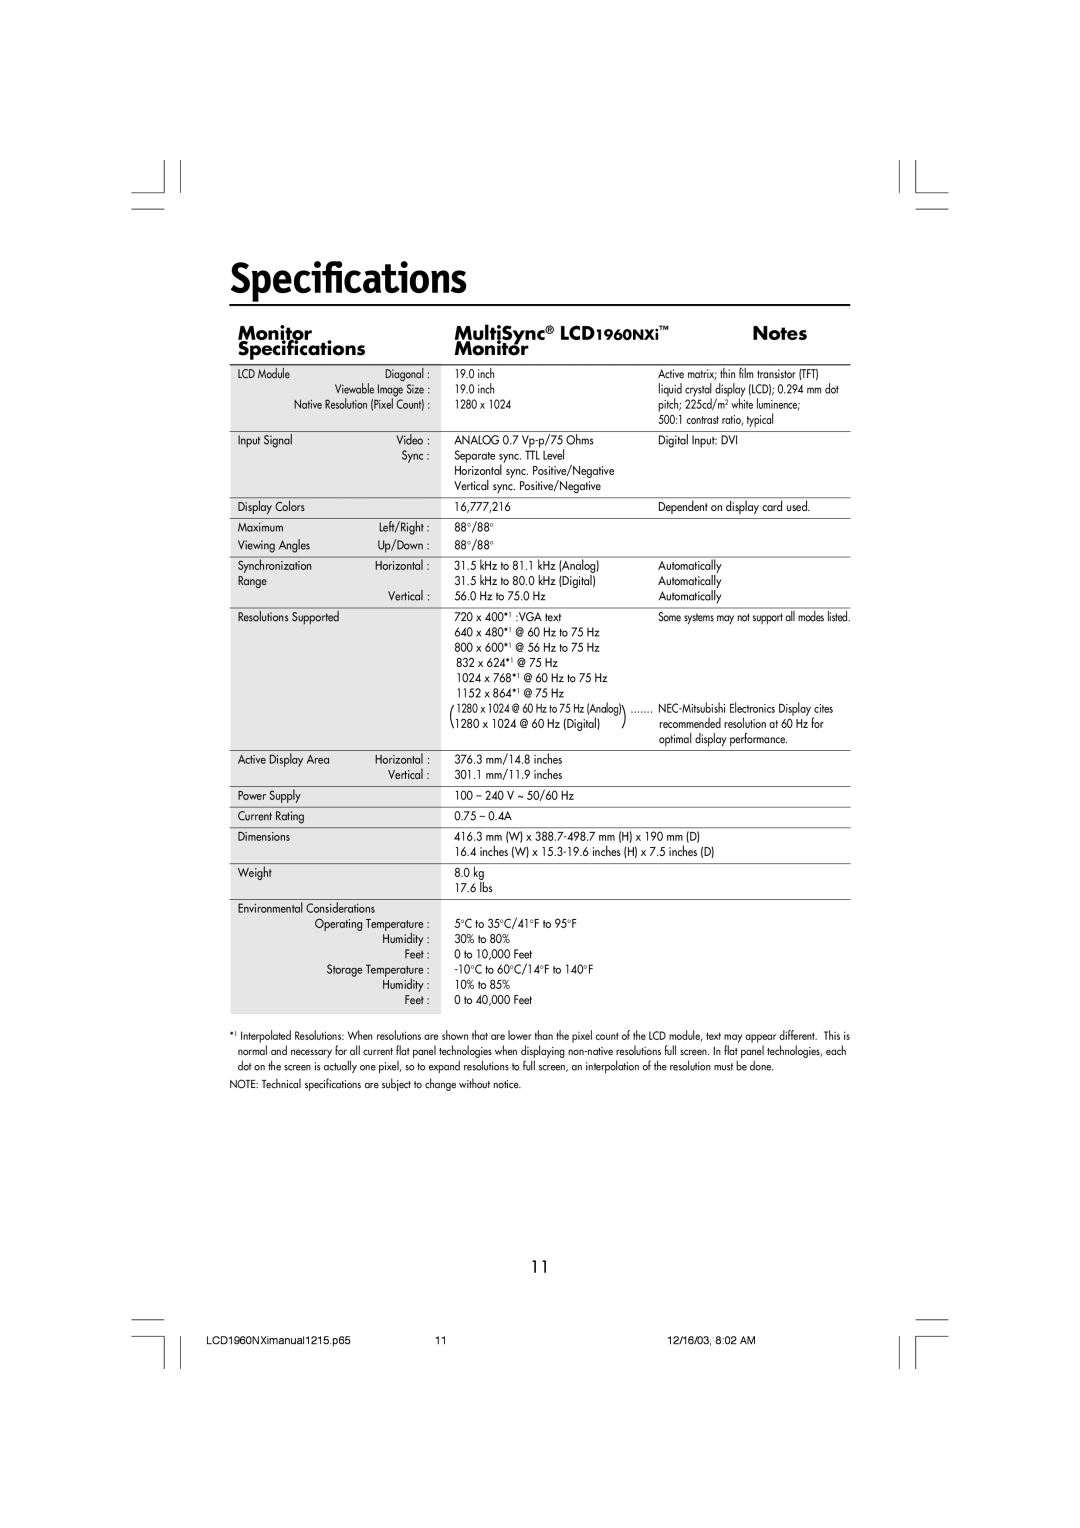 NEC LCD1960NXI manual Specifications, Monitor, MultiSync LCD1960NXi 